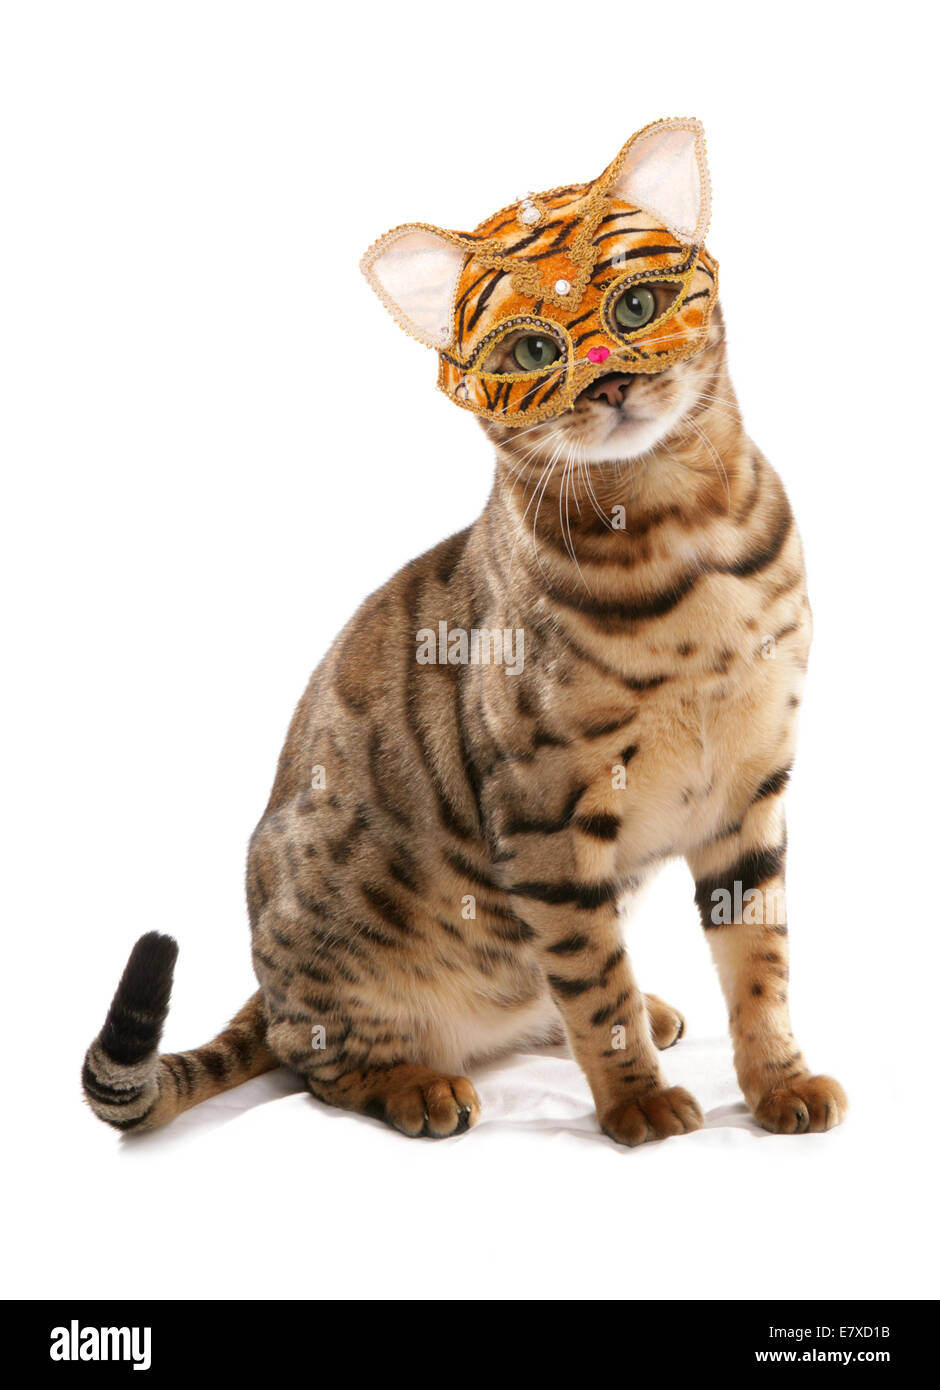 Bengal cat with a tiger masquerade mask cutout Stock Photo